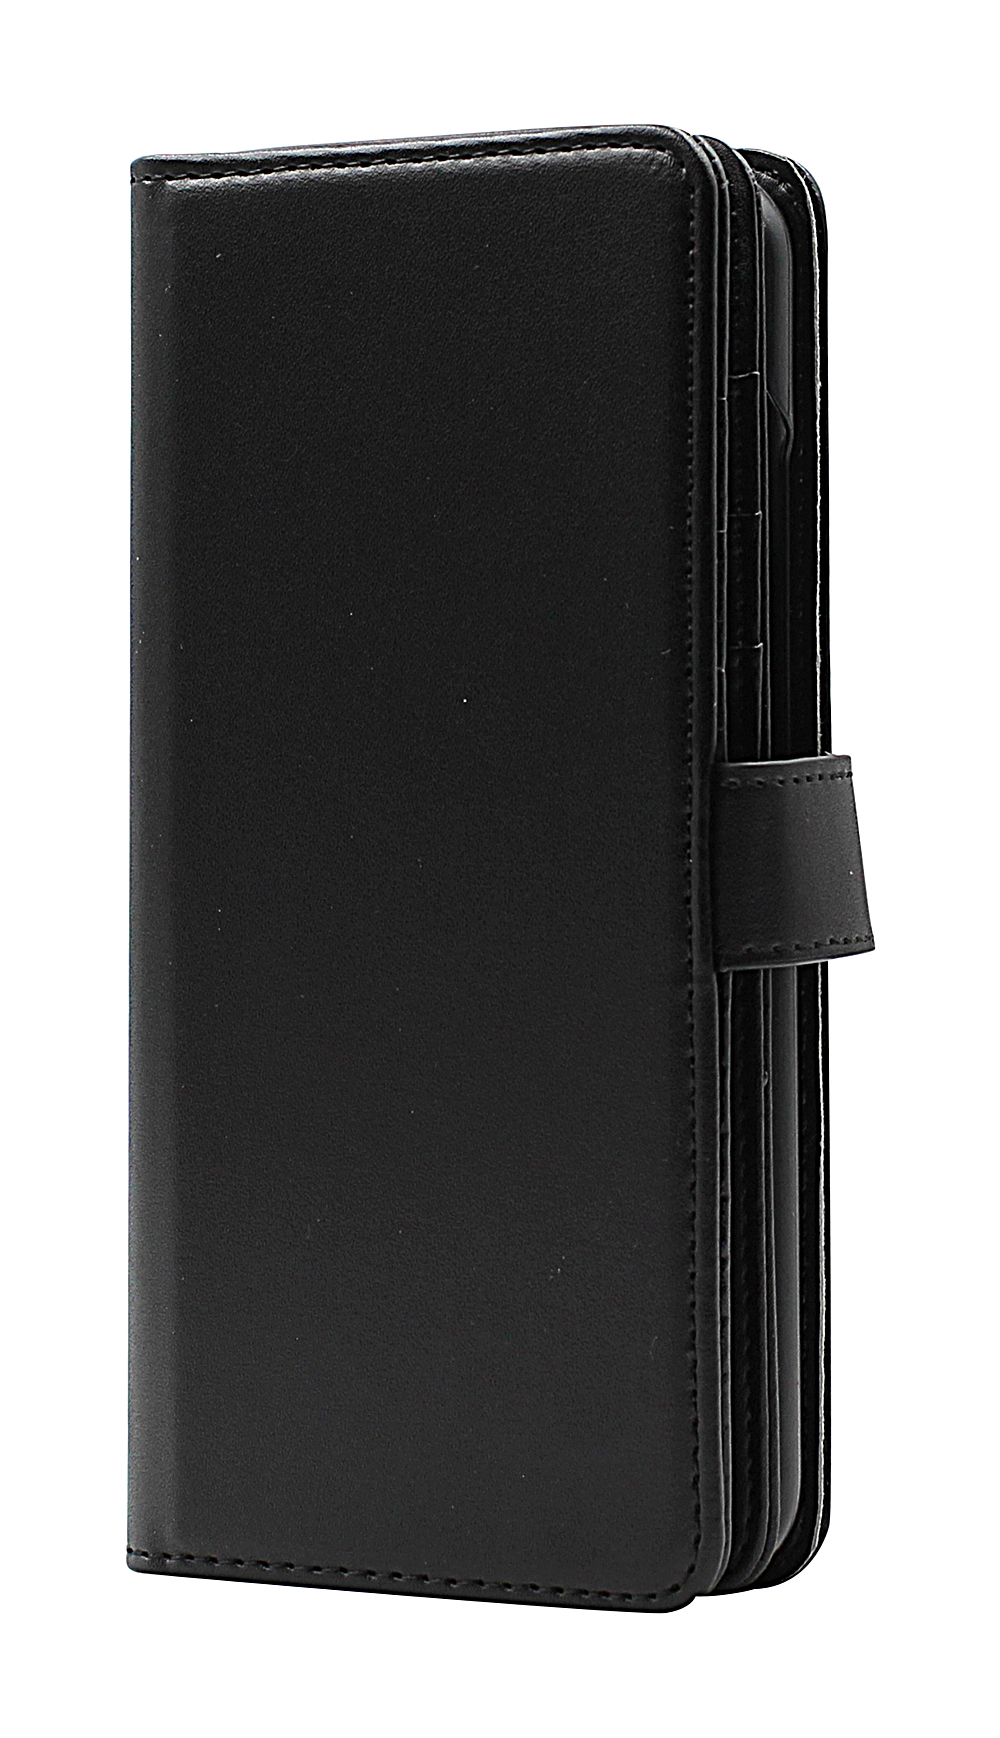 CoverInSkimblocker XL Wallet Xiaomi Redmi Note 10 / Note 10s